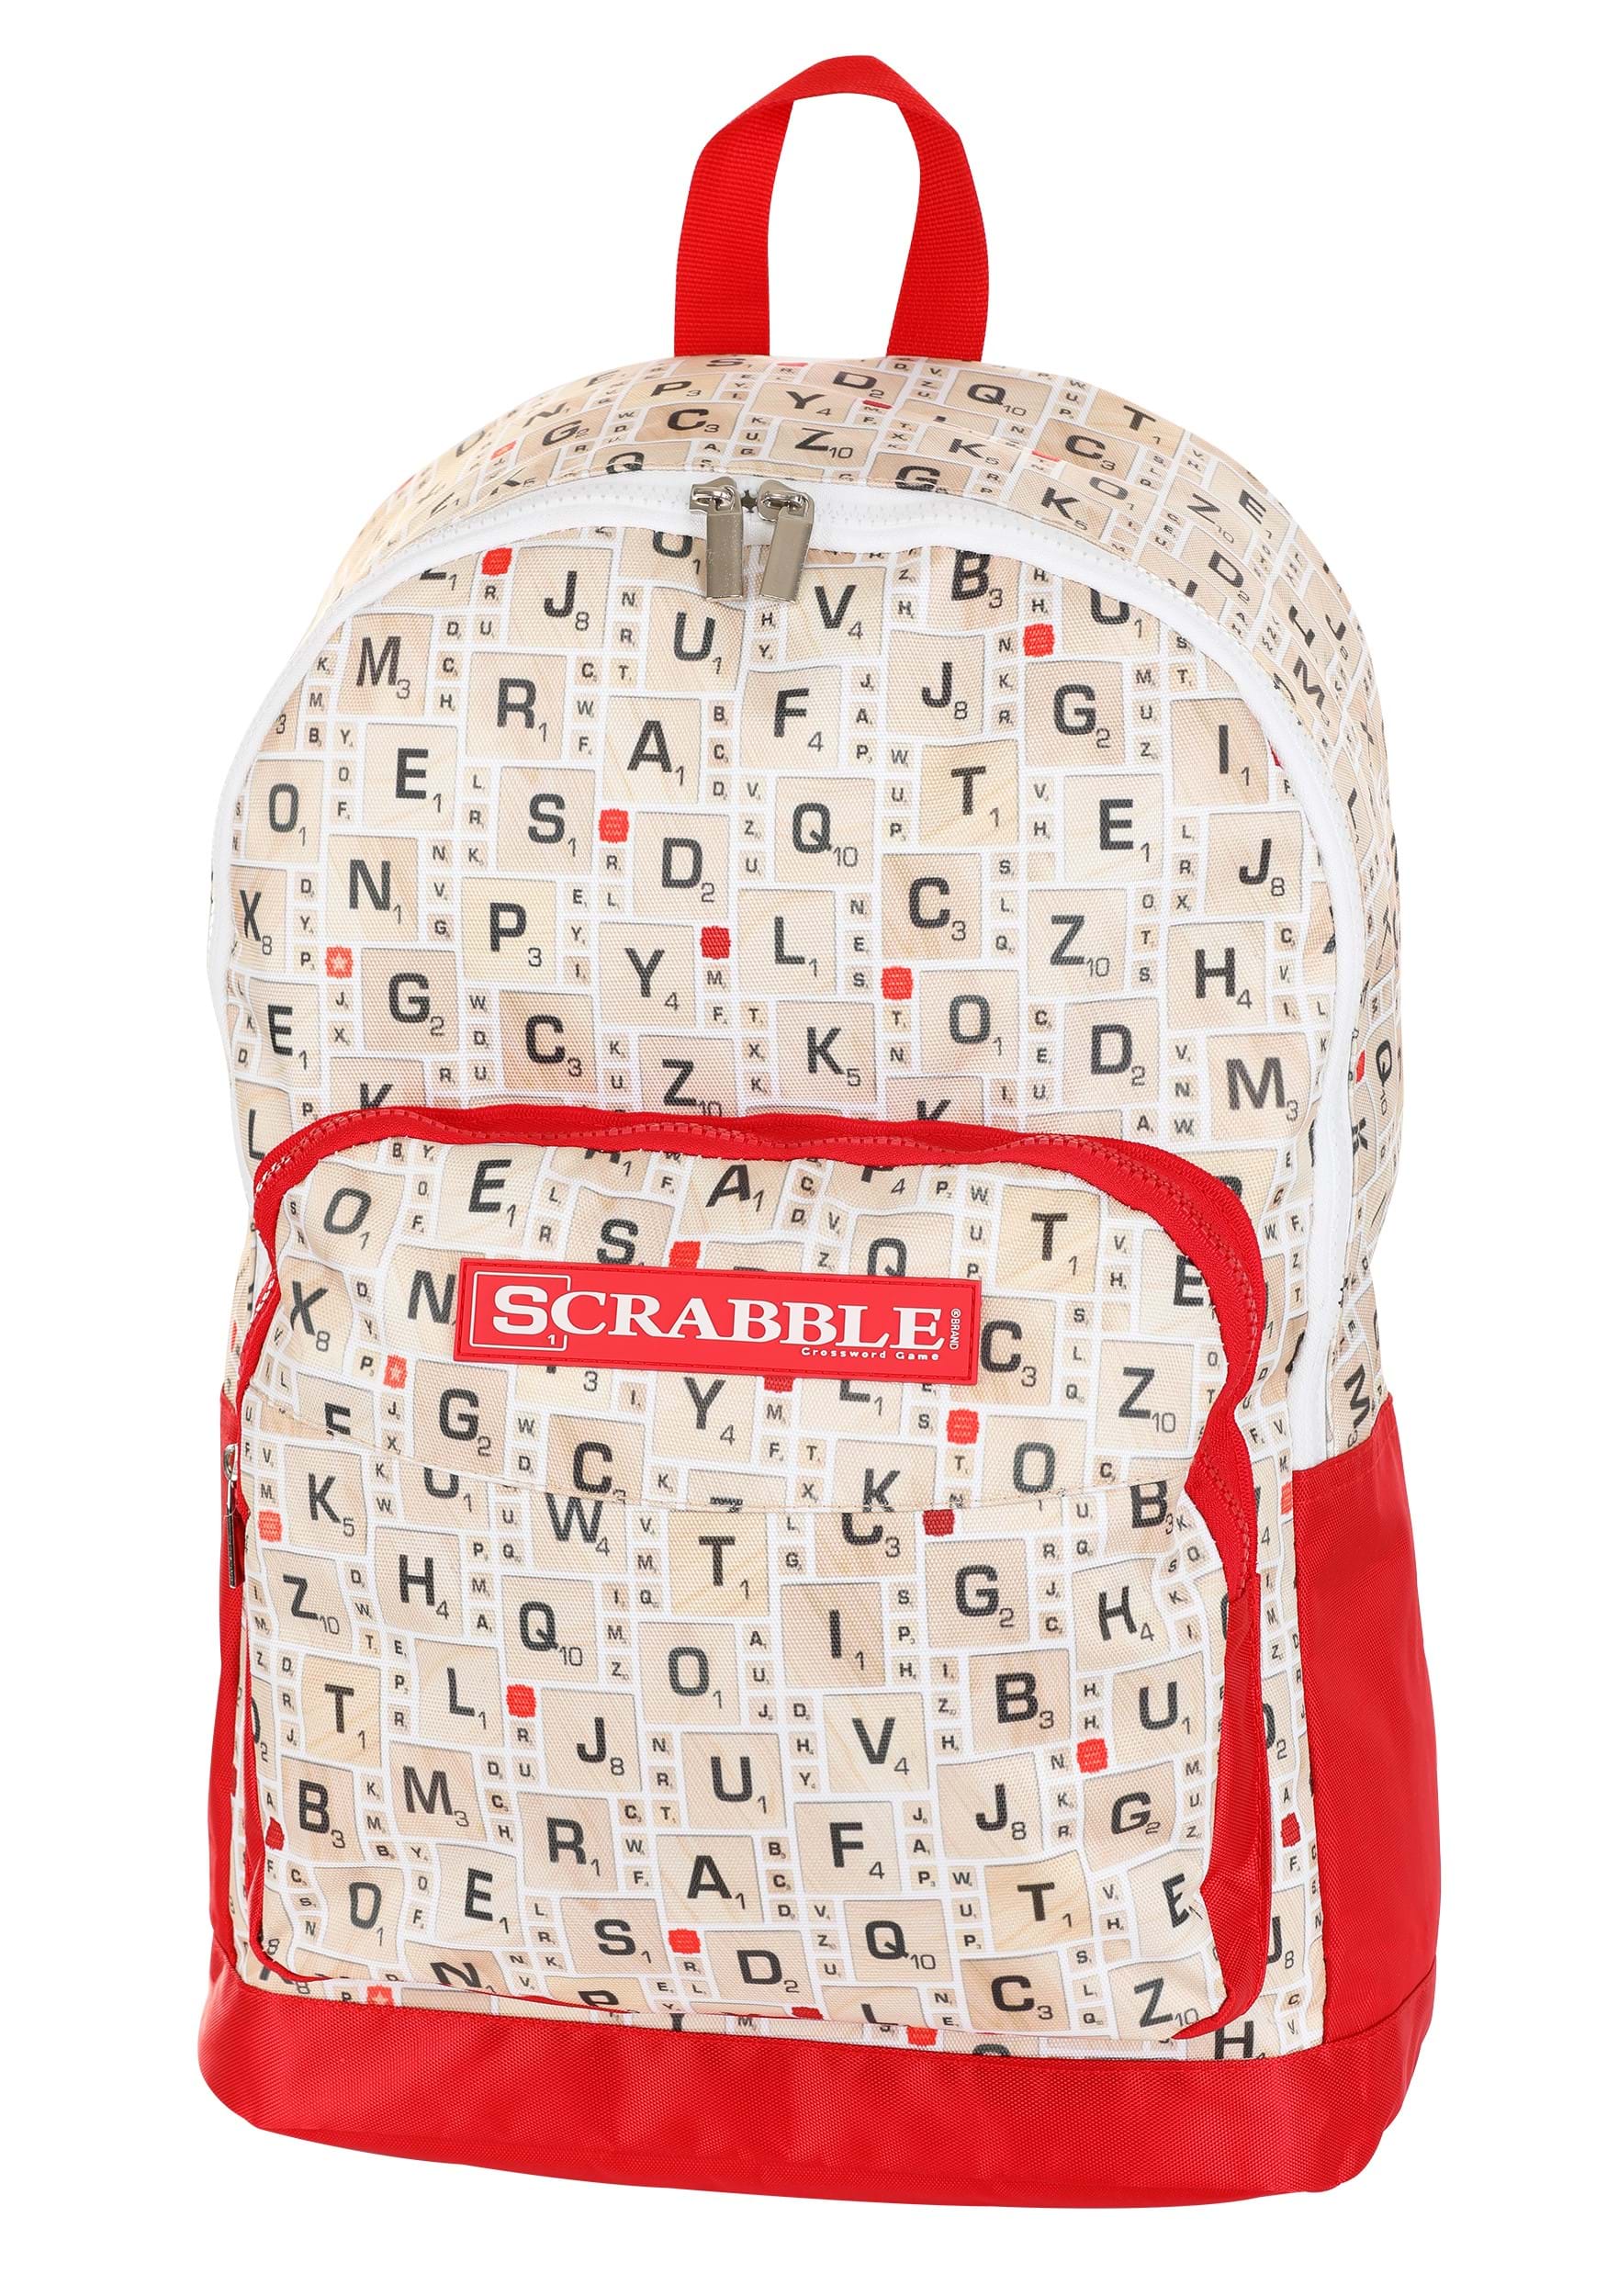 Hasbro Scrabble Backpack